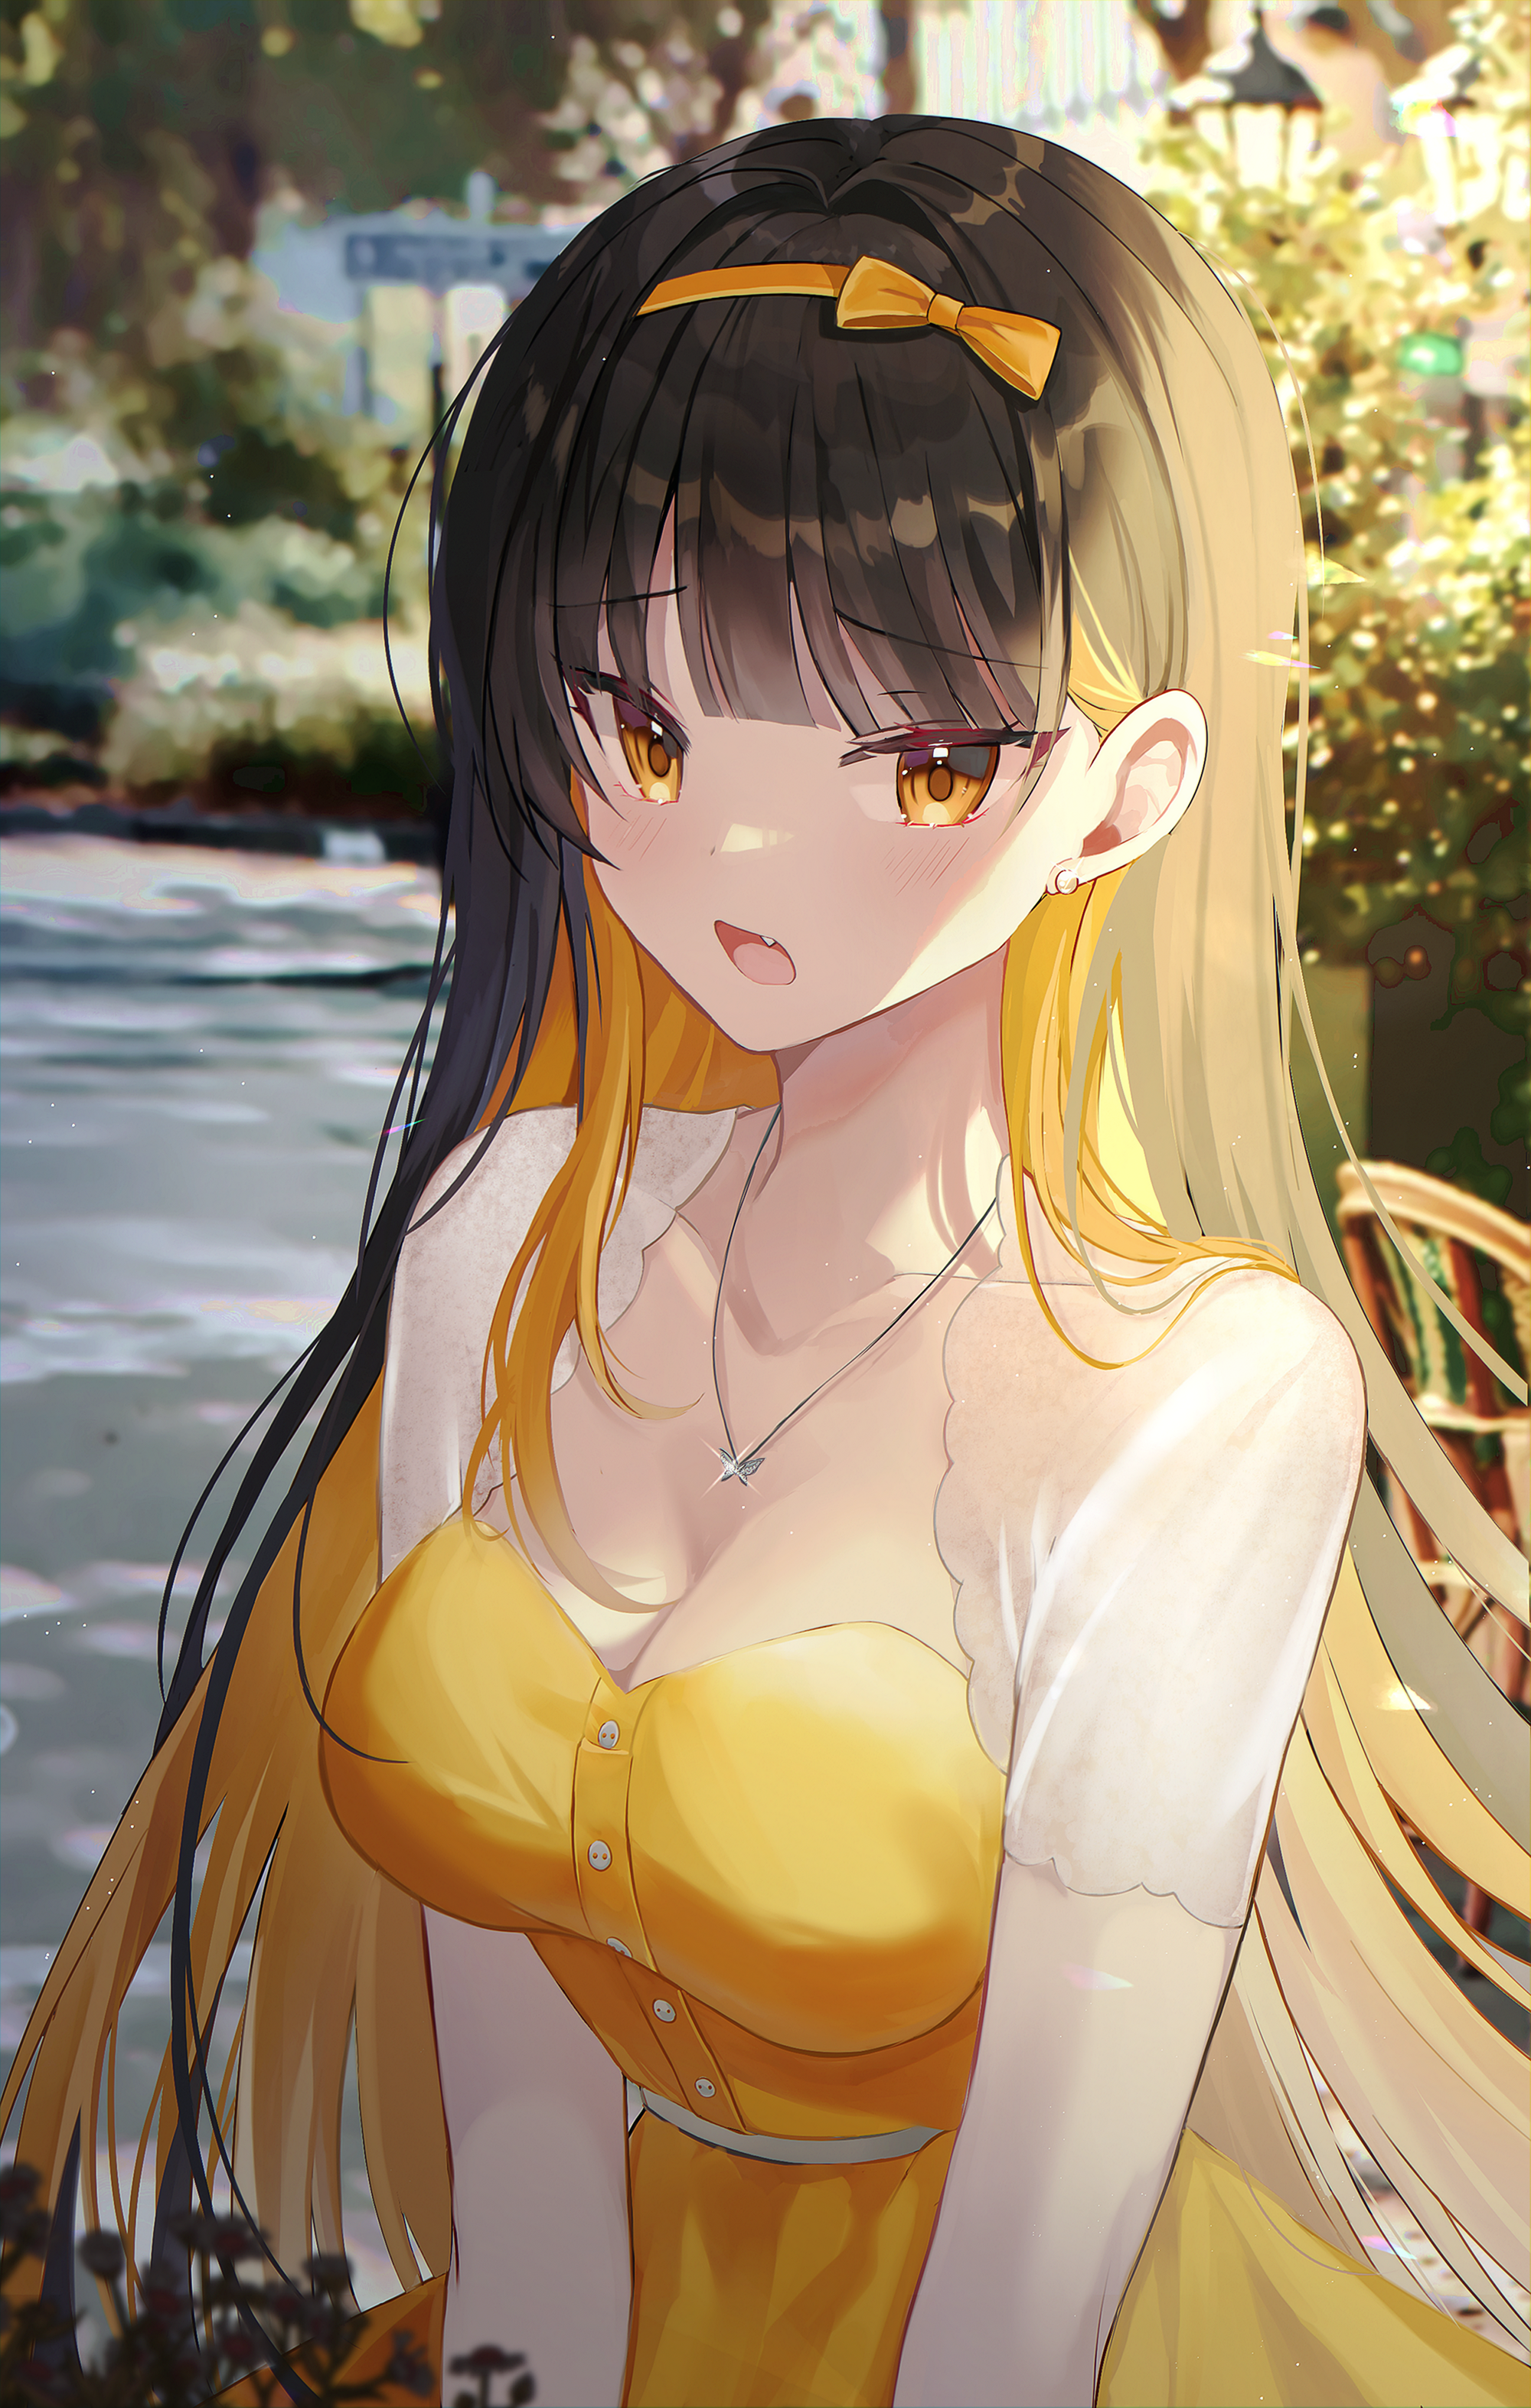 Anime 2000x3145 anime anime girls digital art artwork 2D portrait display portrait looking at viewer yellow eyes brunette yellow dress outdoors